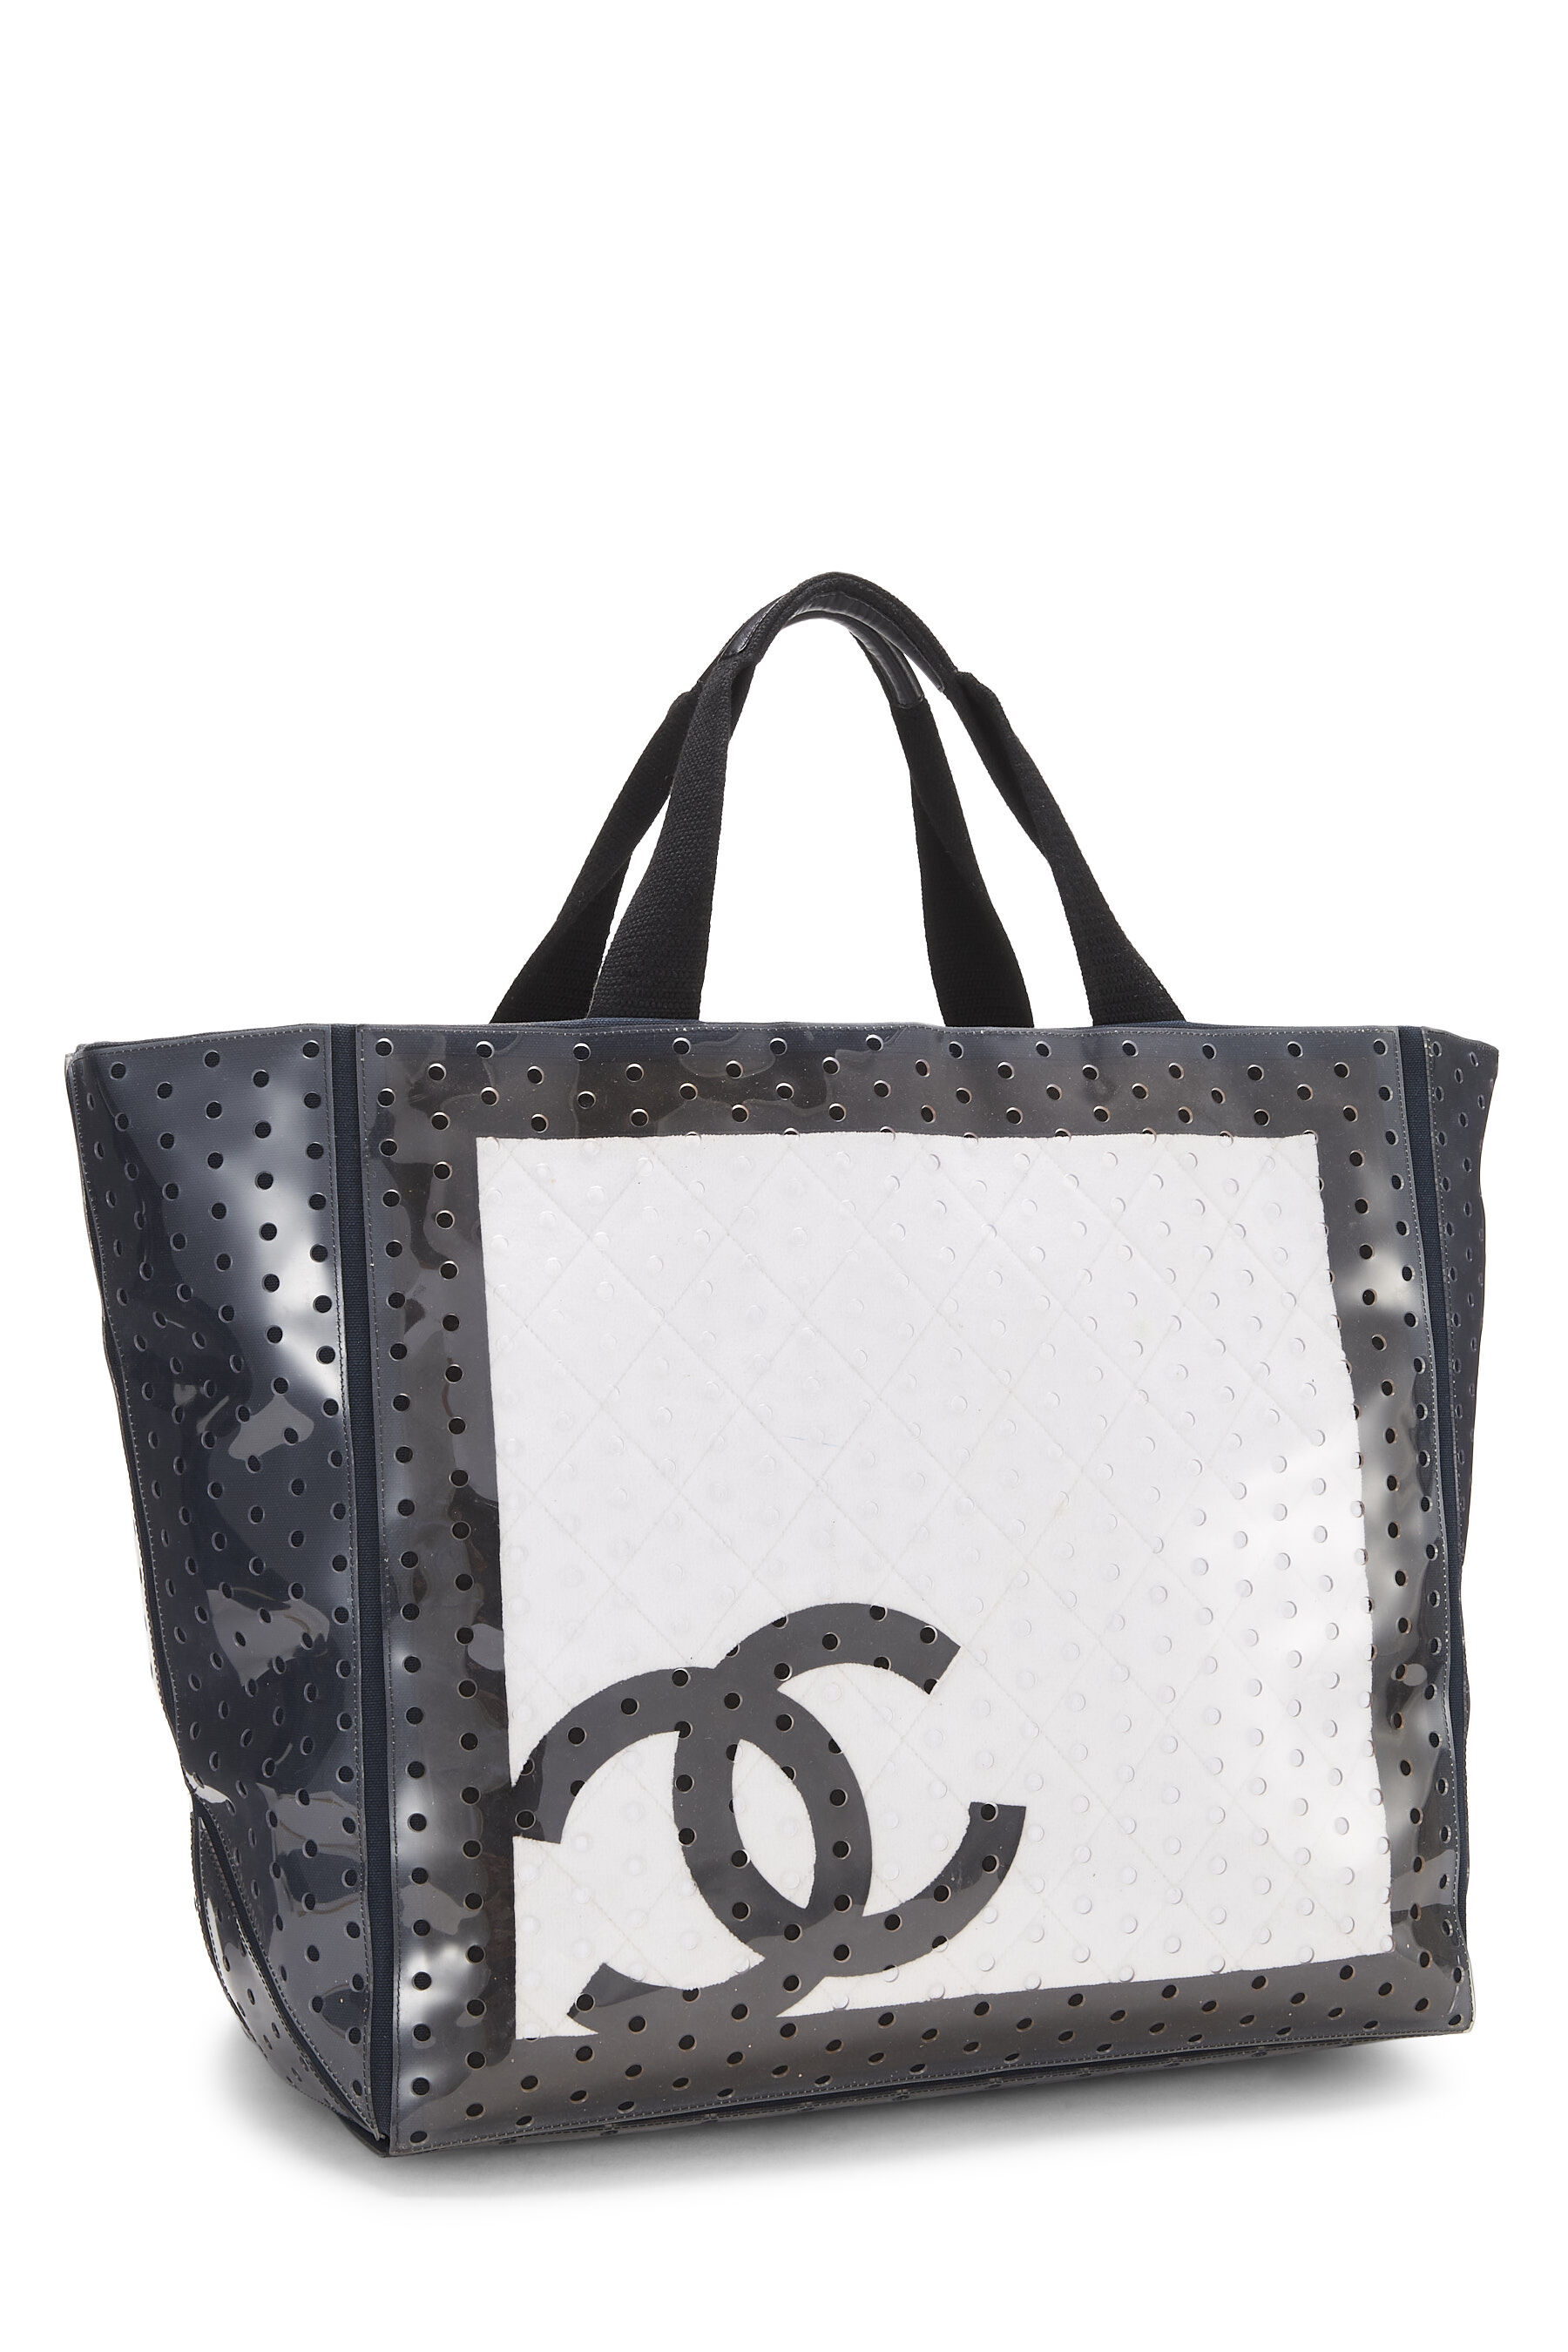 CHANEL Vinyl Exterior Bags & Handbags for Women, Authenticity Guaranteed